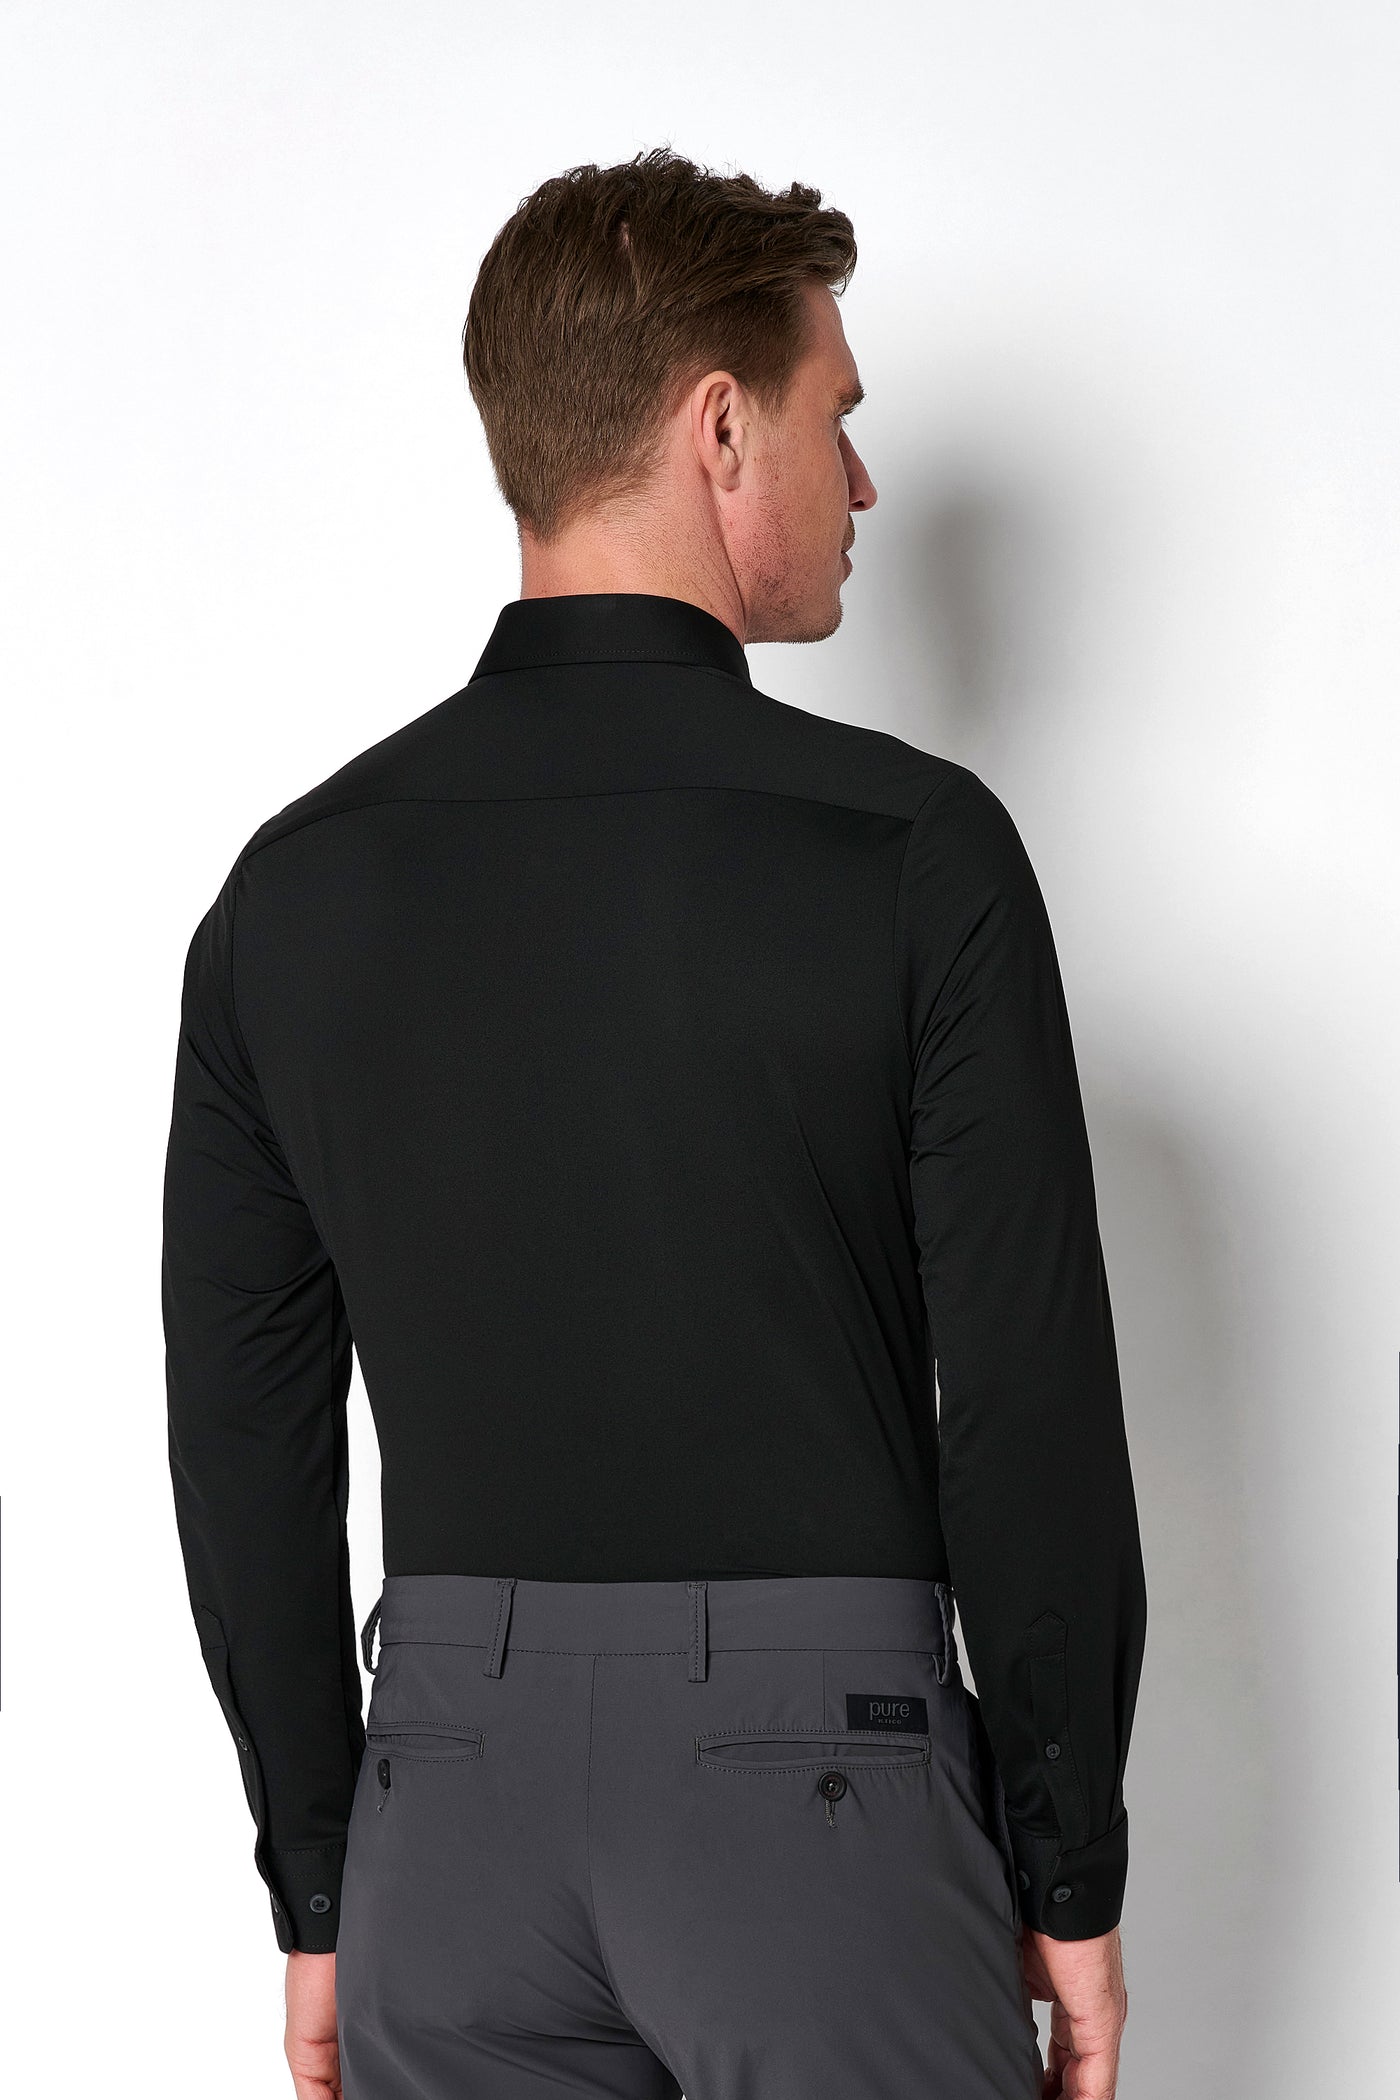 4030-21750 - Functional Shirt - black